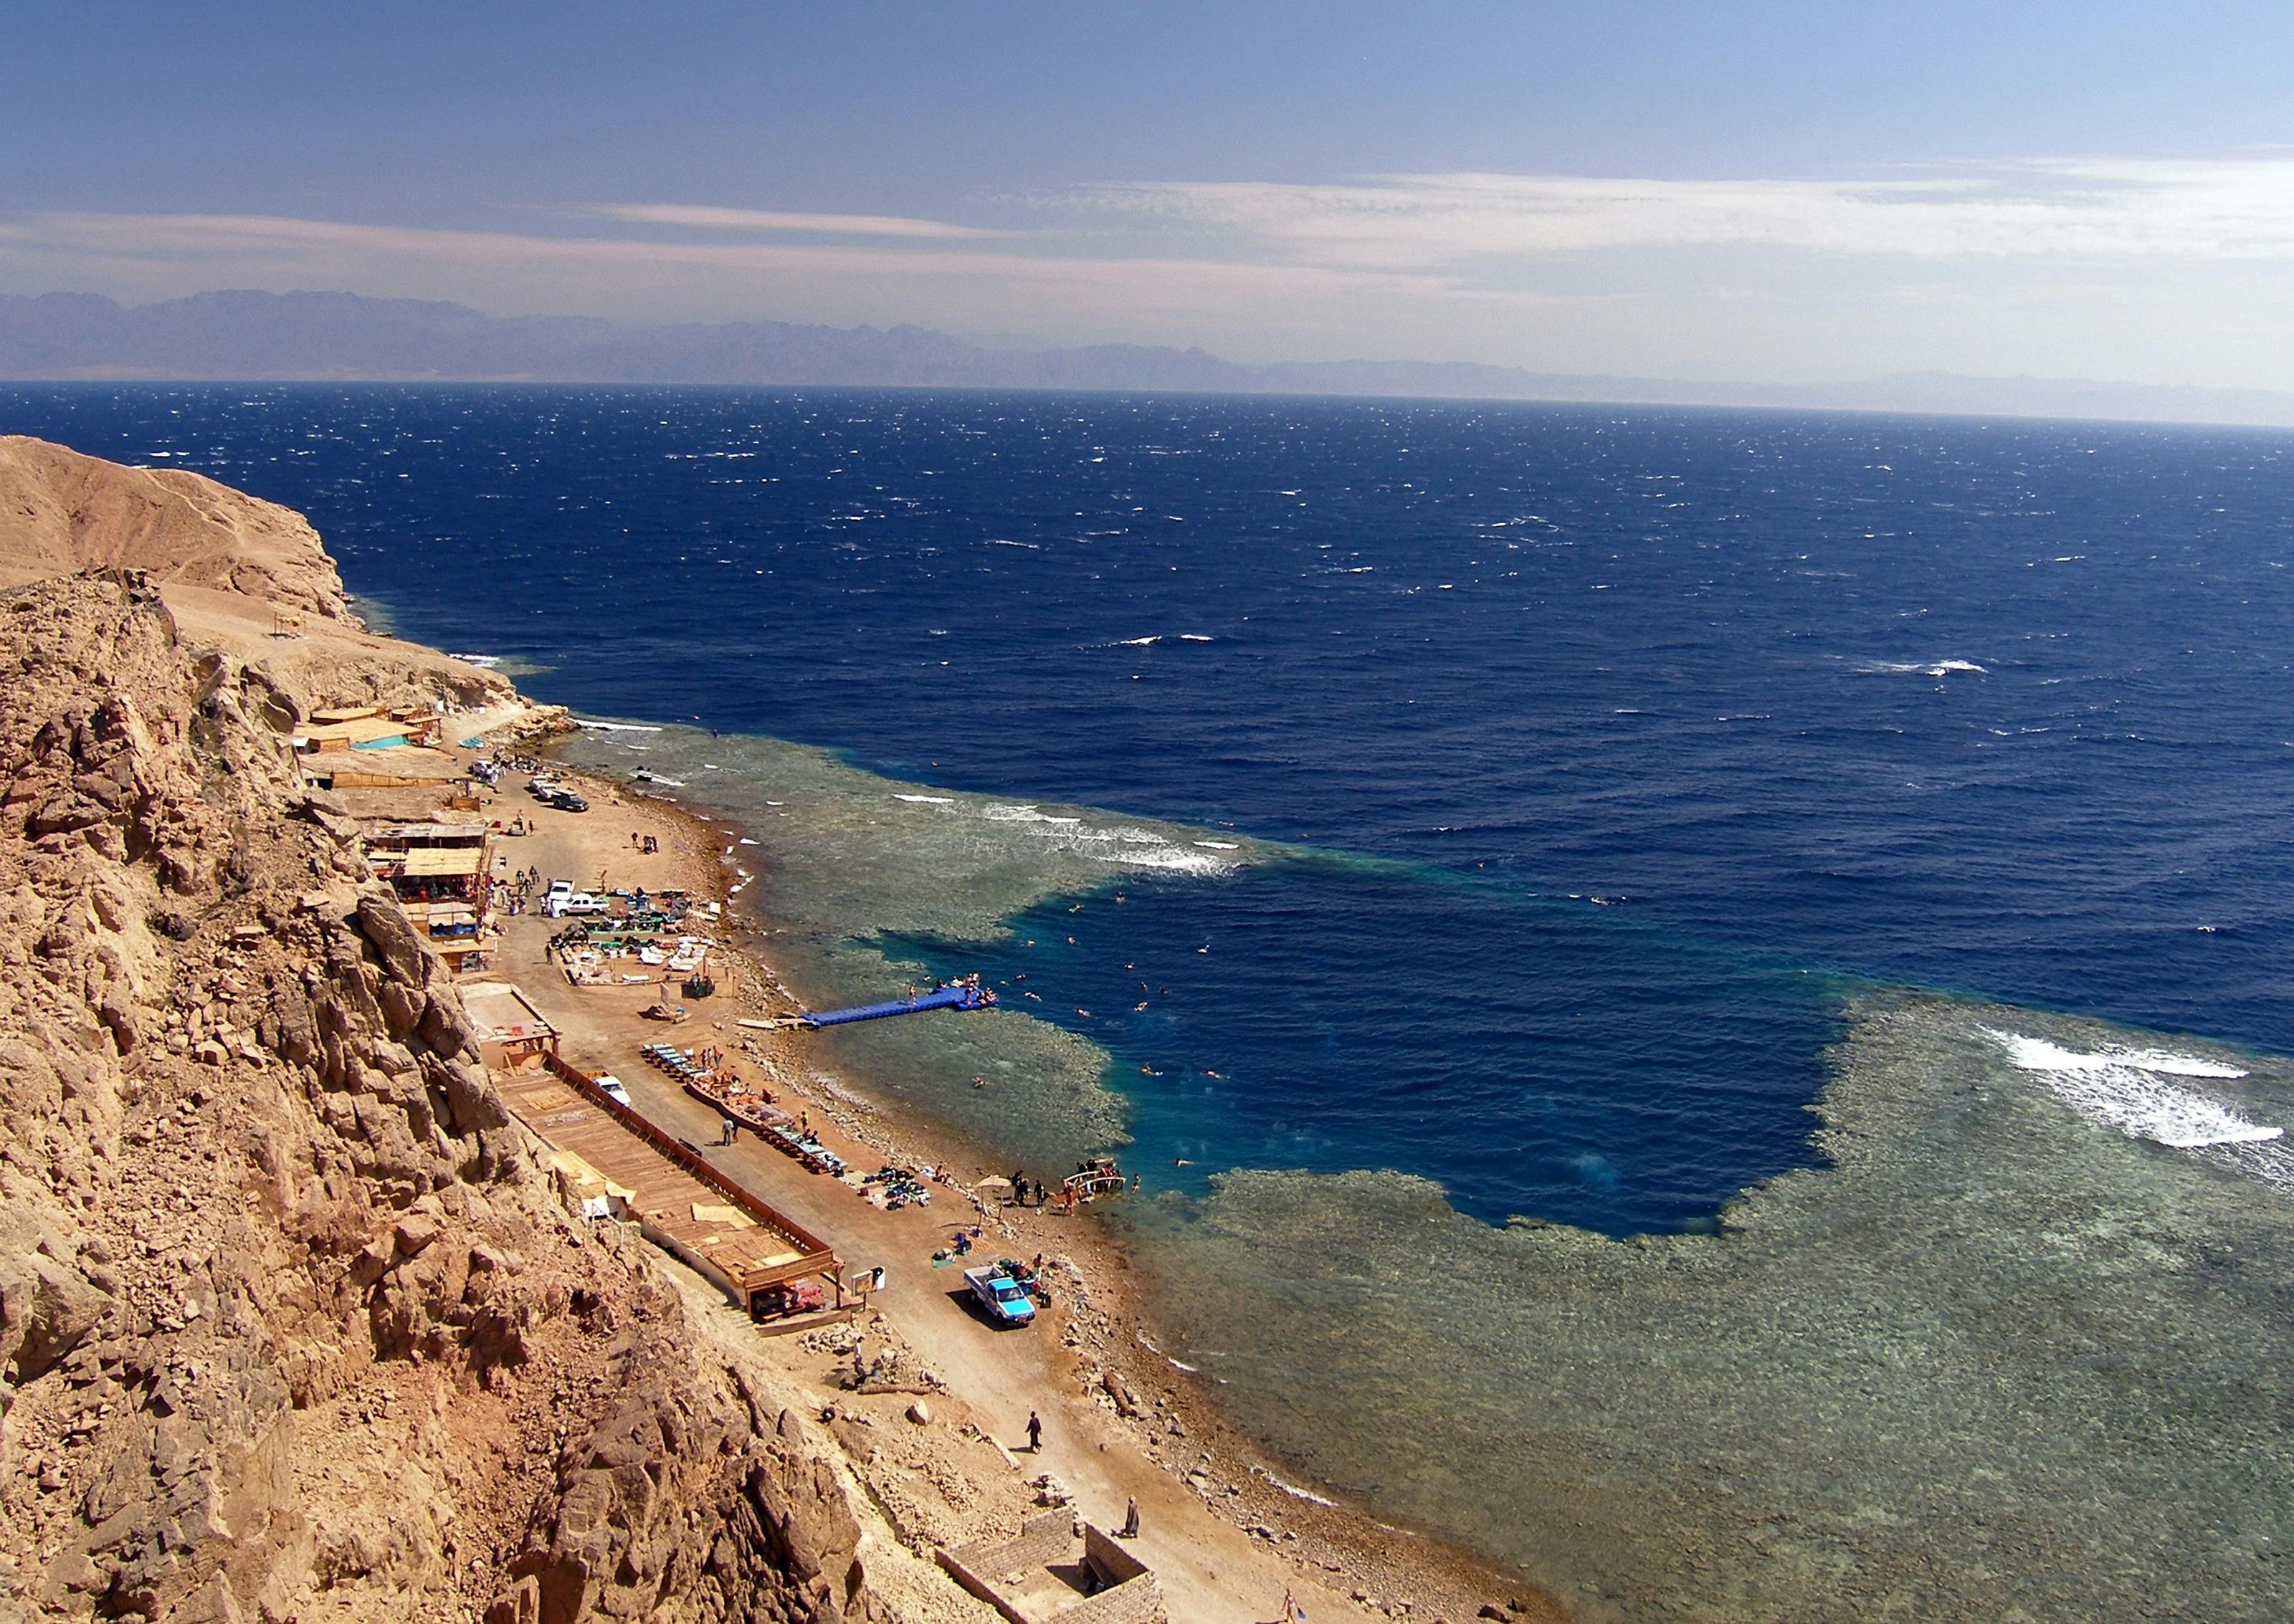 Blue Hole Snorkeling, 4x4 safari and Dahab tour from Sharm El Sheikh